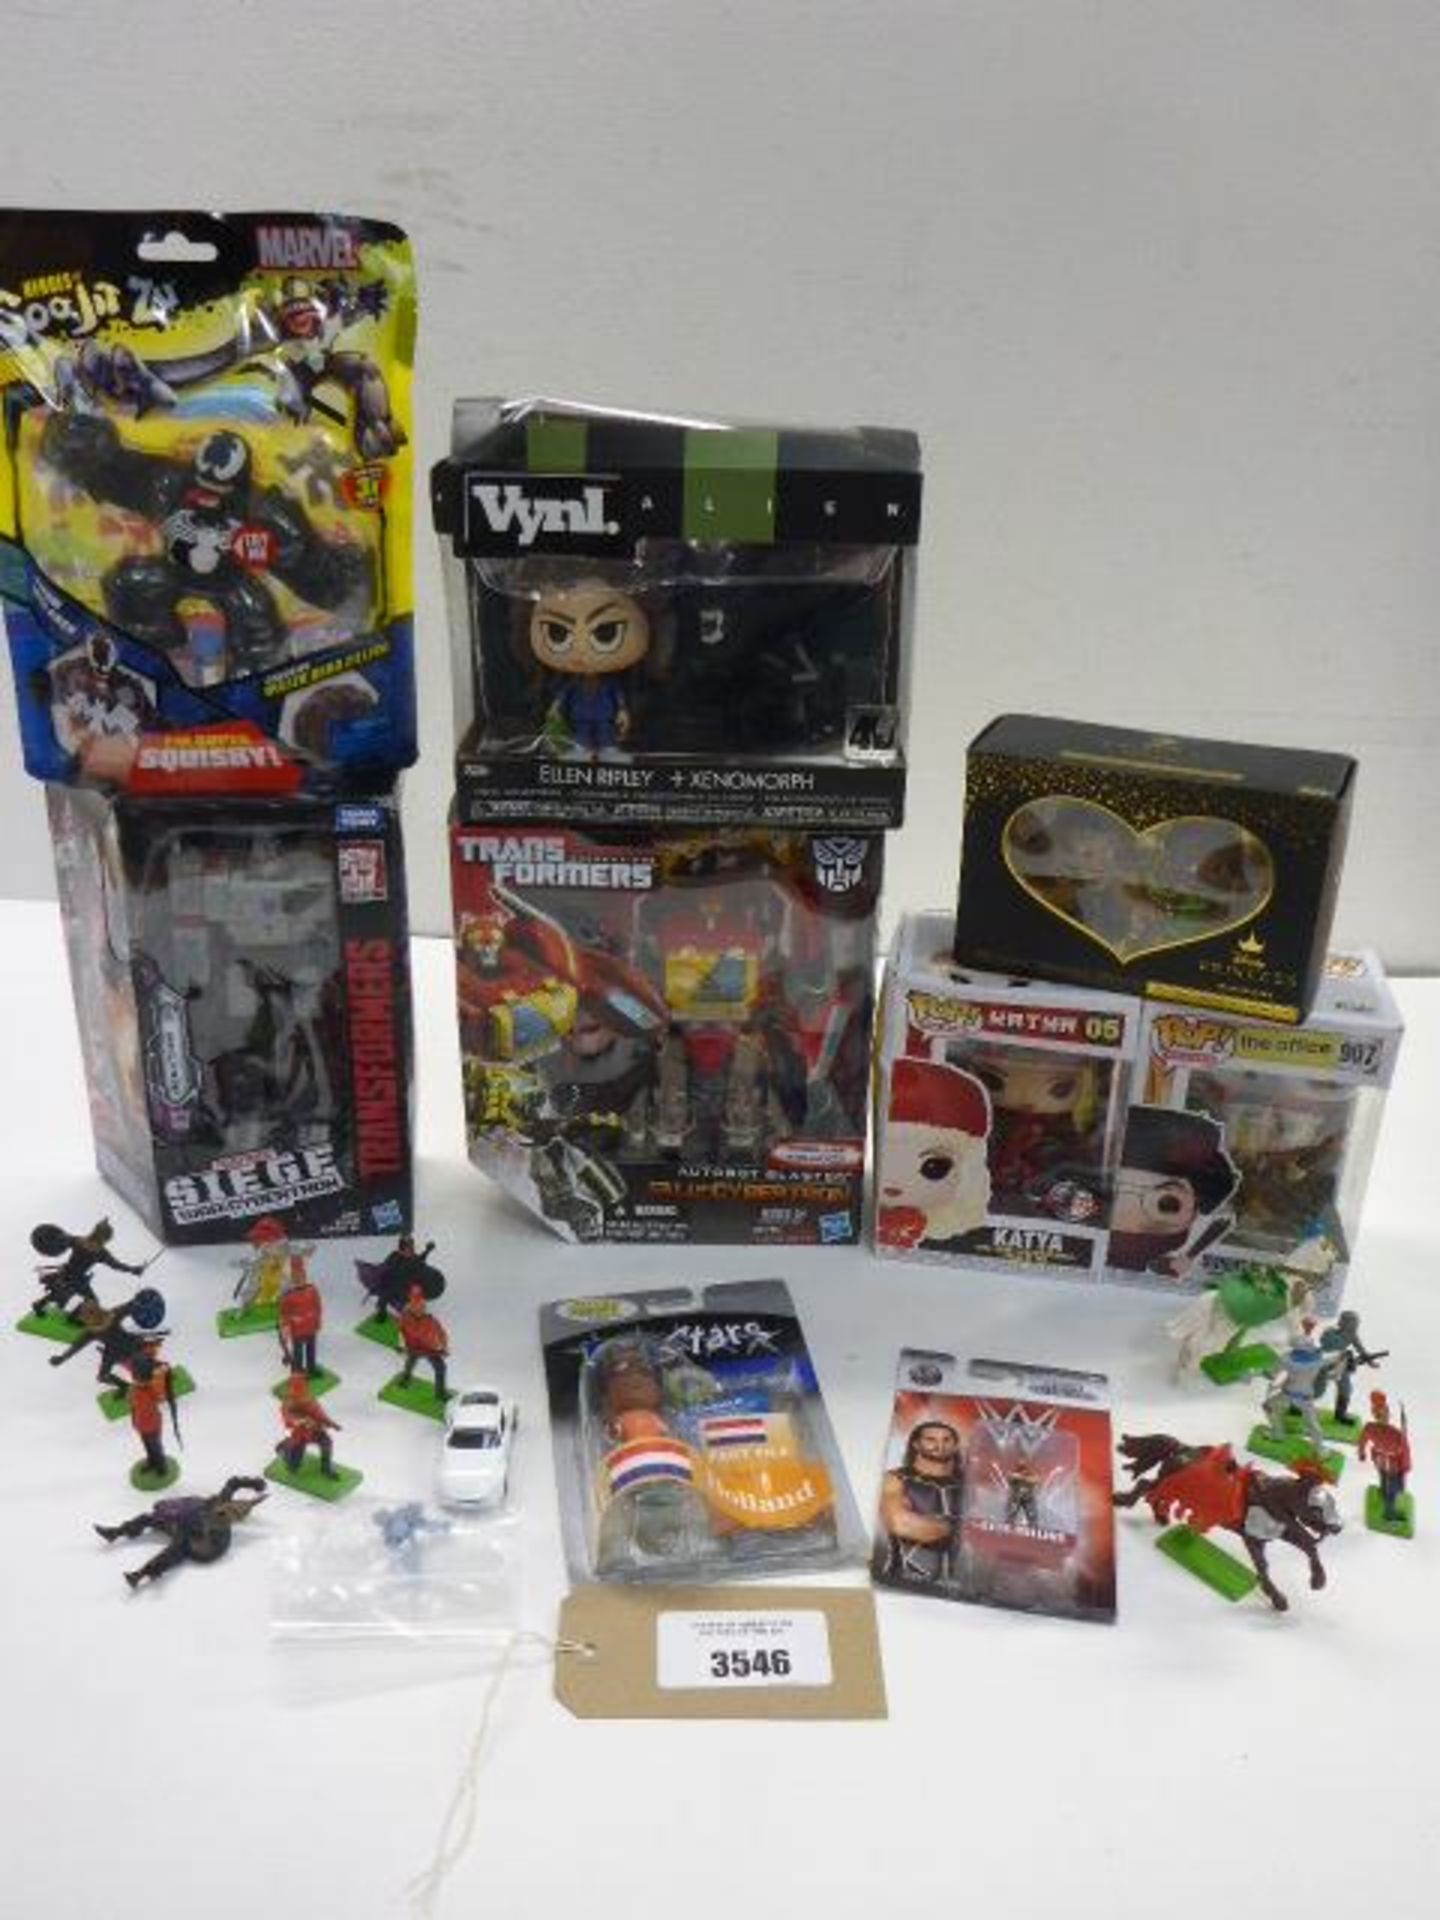 Selection of collection figures including Pop!. Alien, Disney Princess, Transformers etc